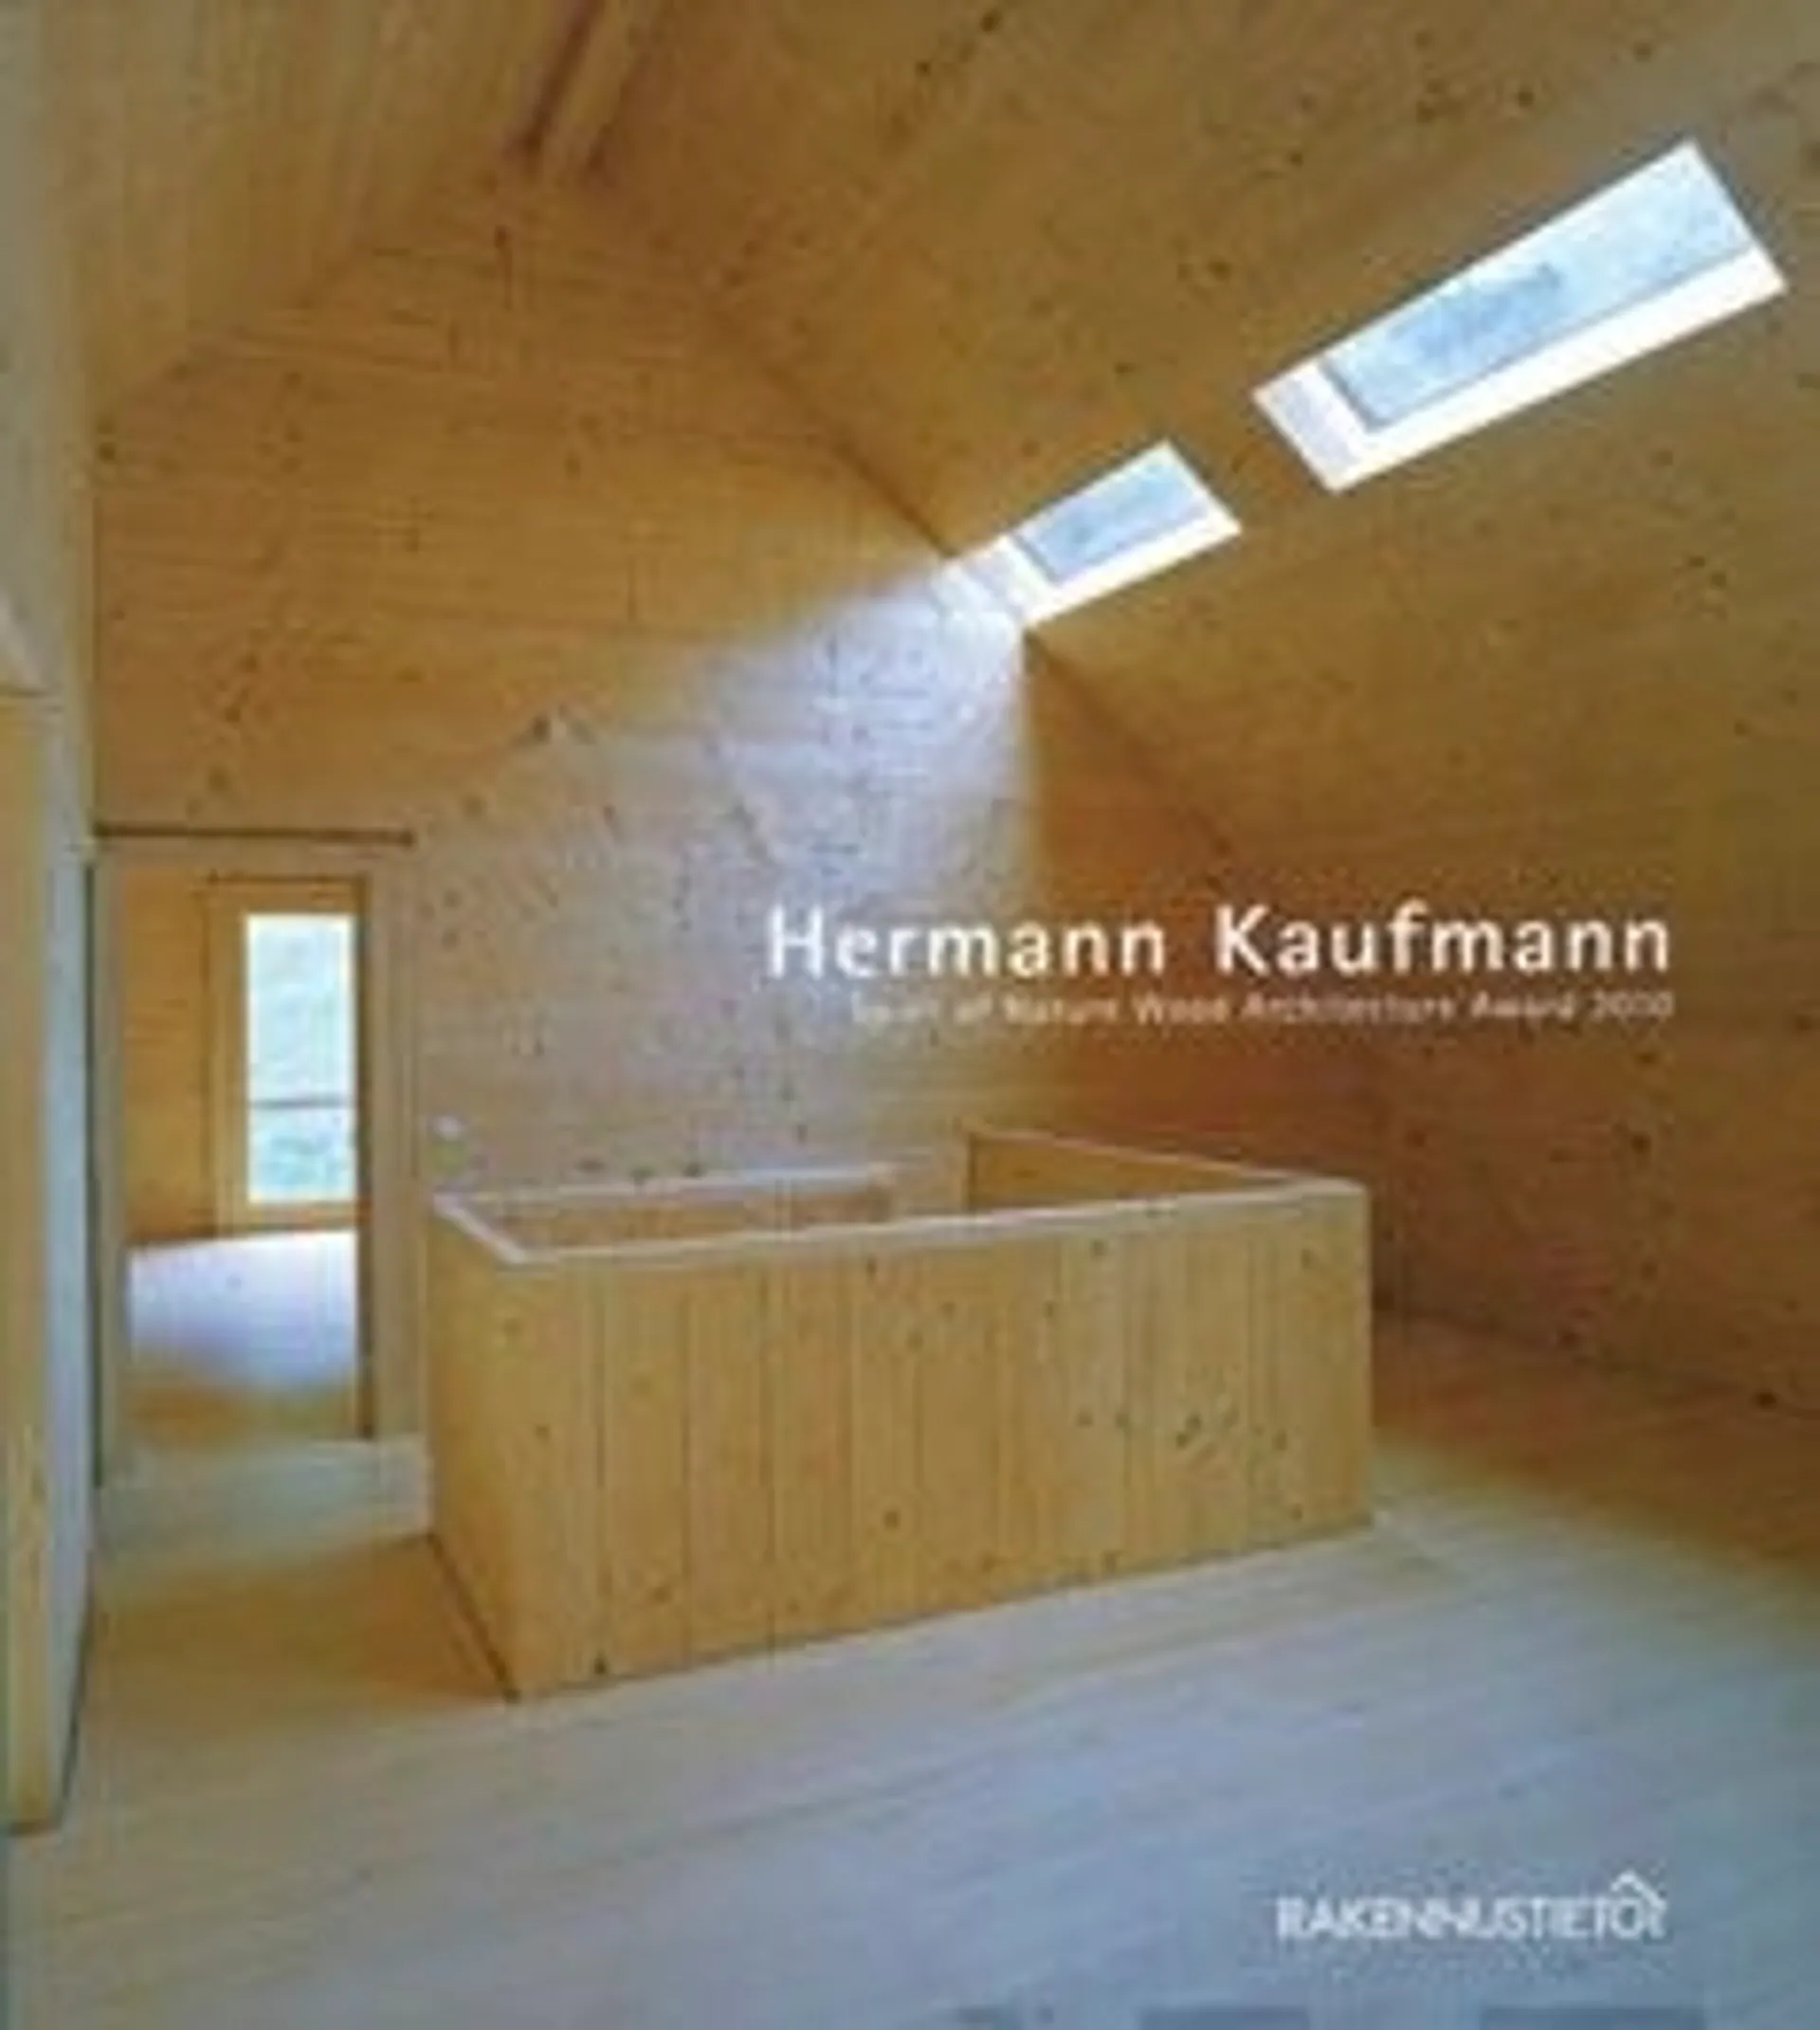 Kaufmann, Hermann Kaufmann - Spirit of Nature Wood Architecture Award 2010